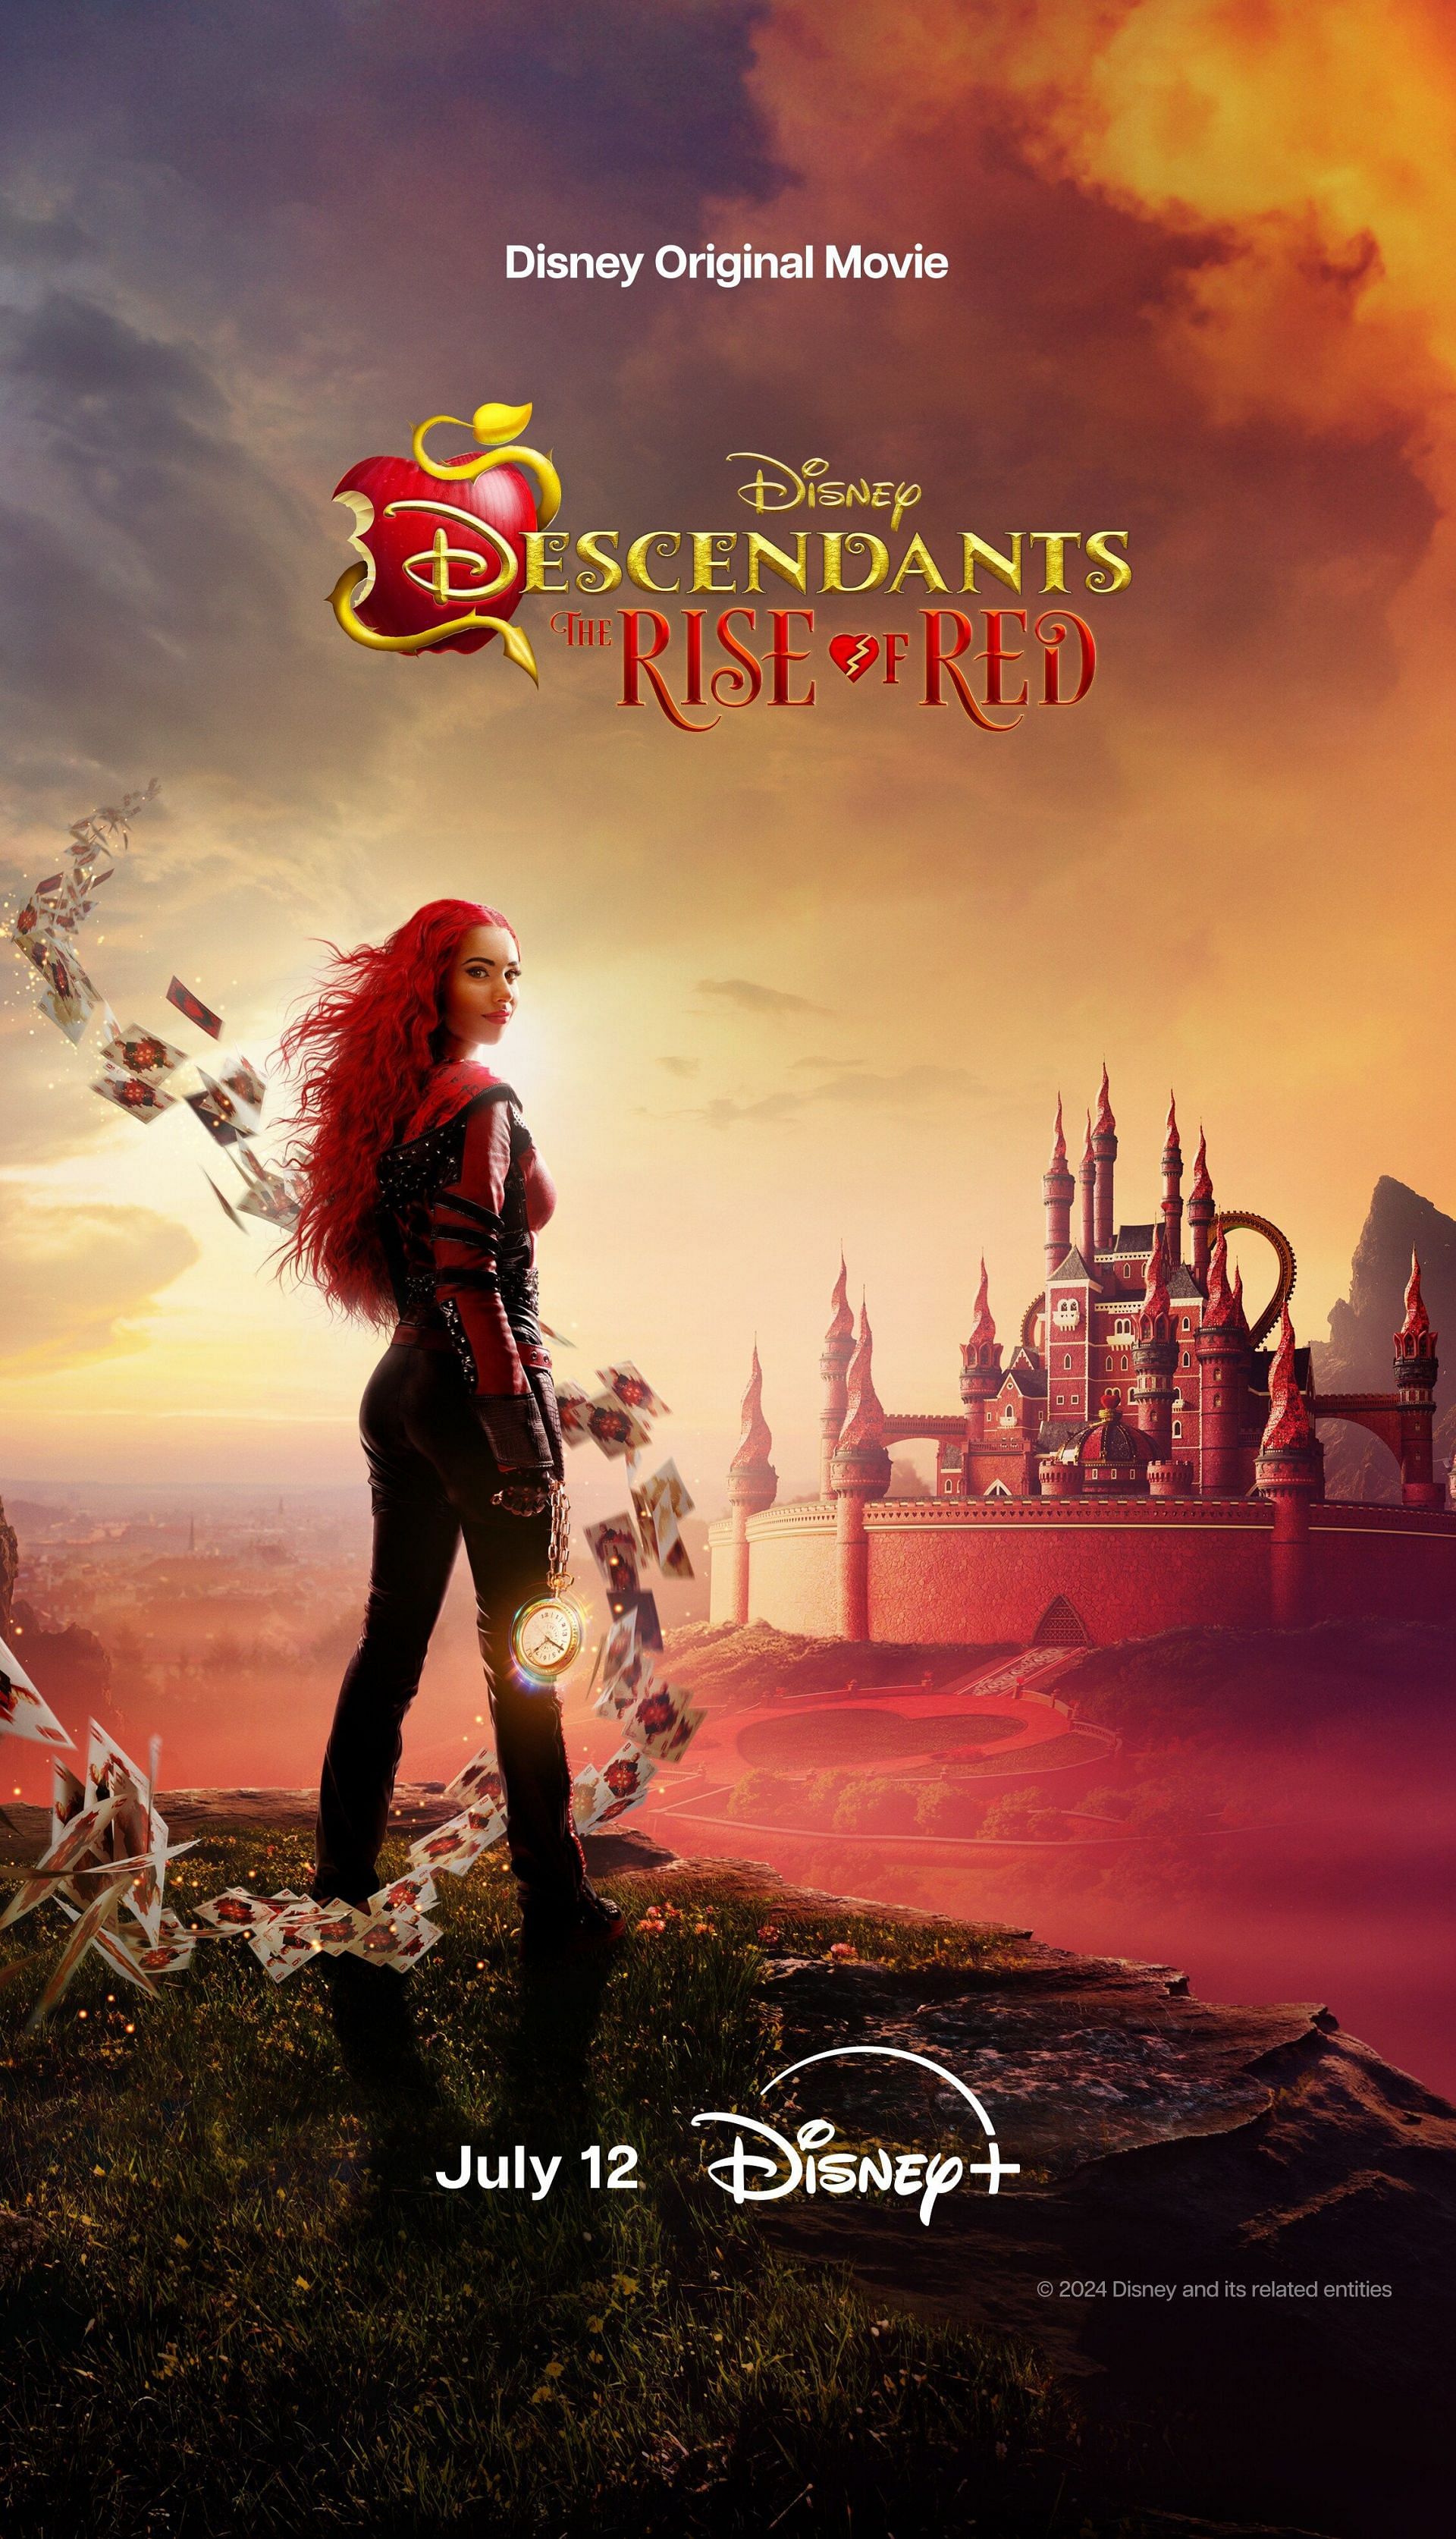 A poster for Descendants: Rise of Red (Image via Disney)